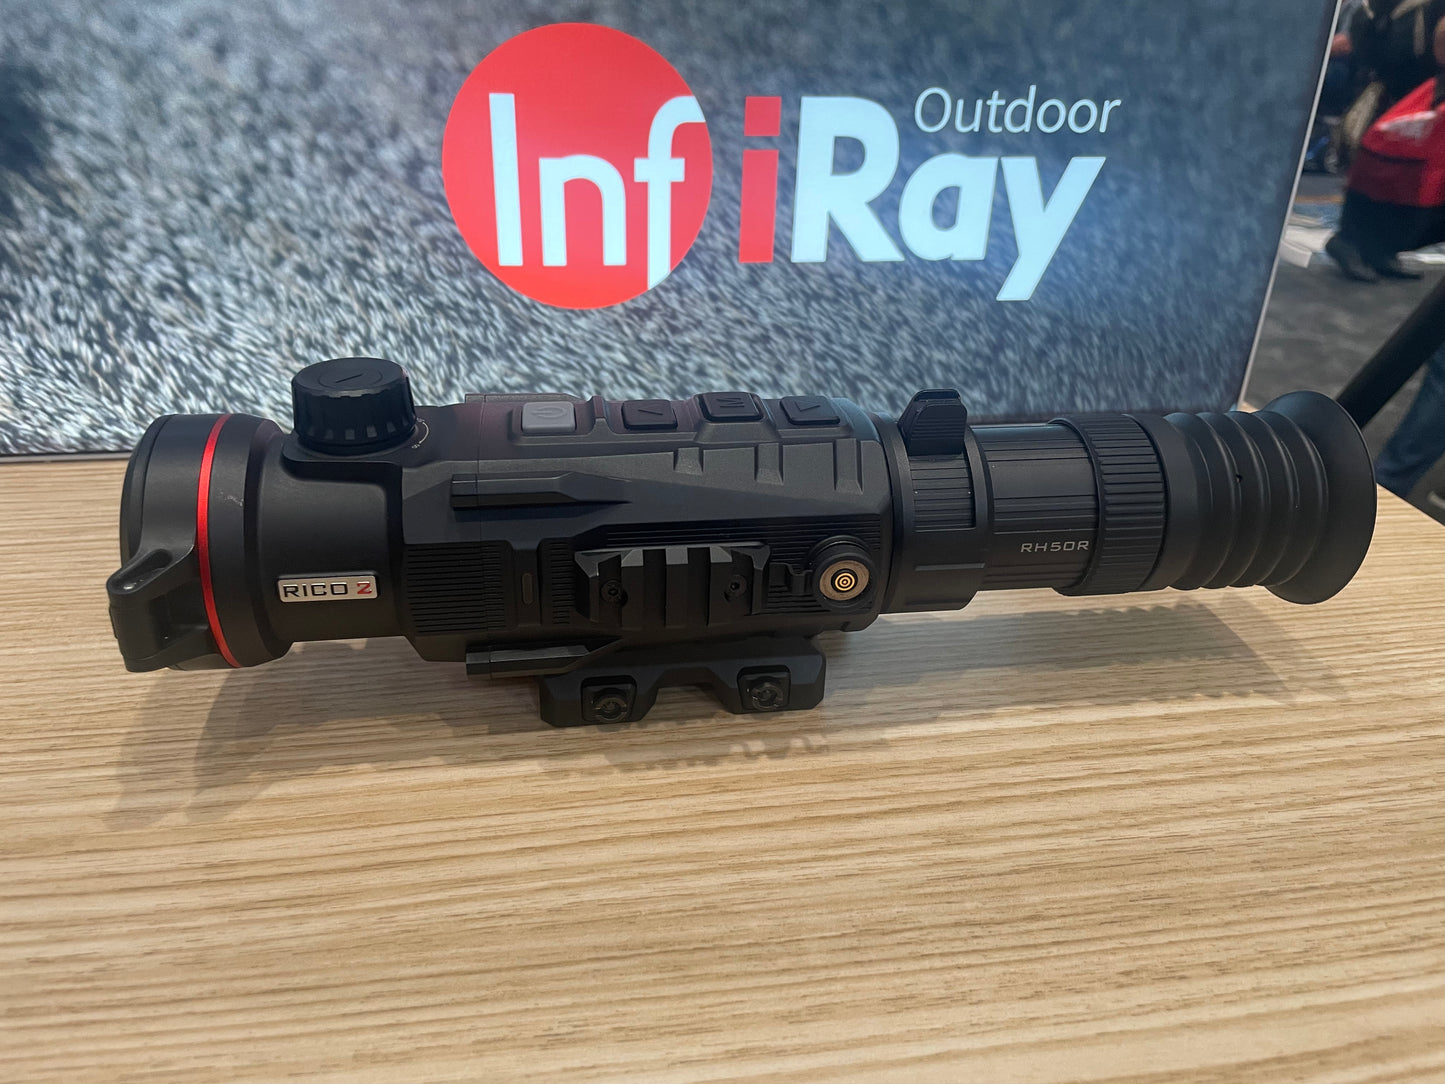 InfiRay Outdoor RICO Mk2 LRF RH50R 640 3x 50mm Thermal Scope